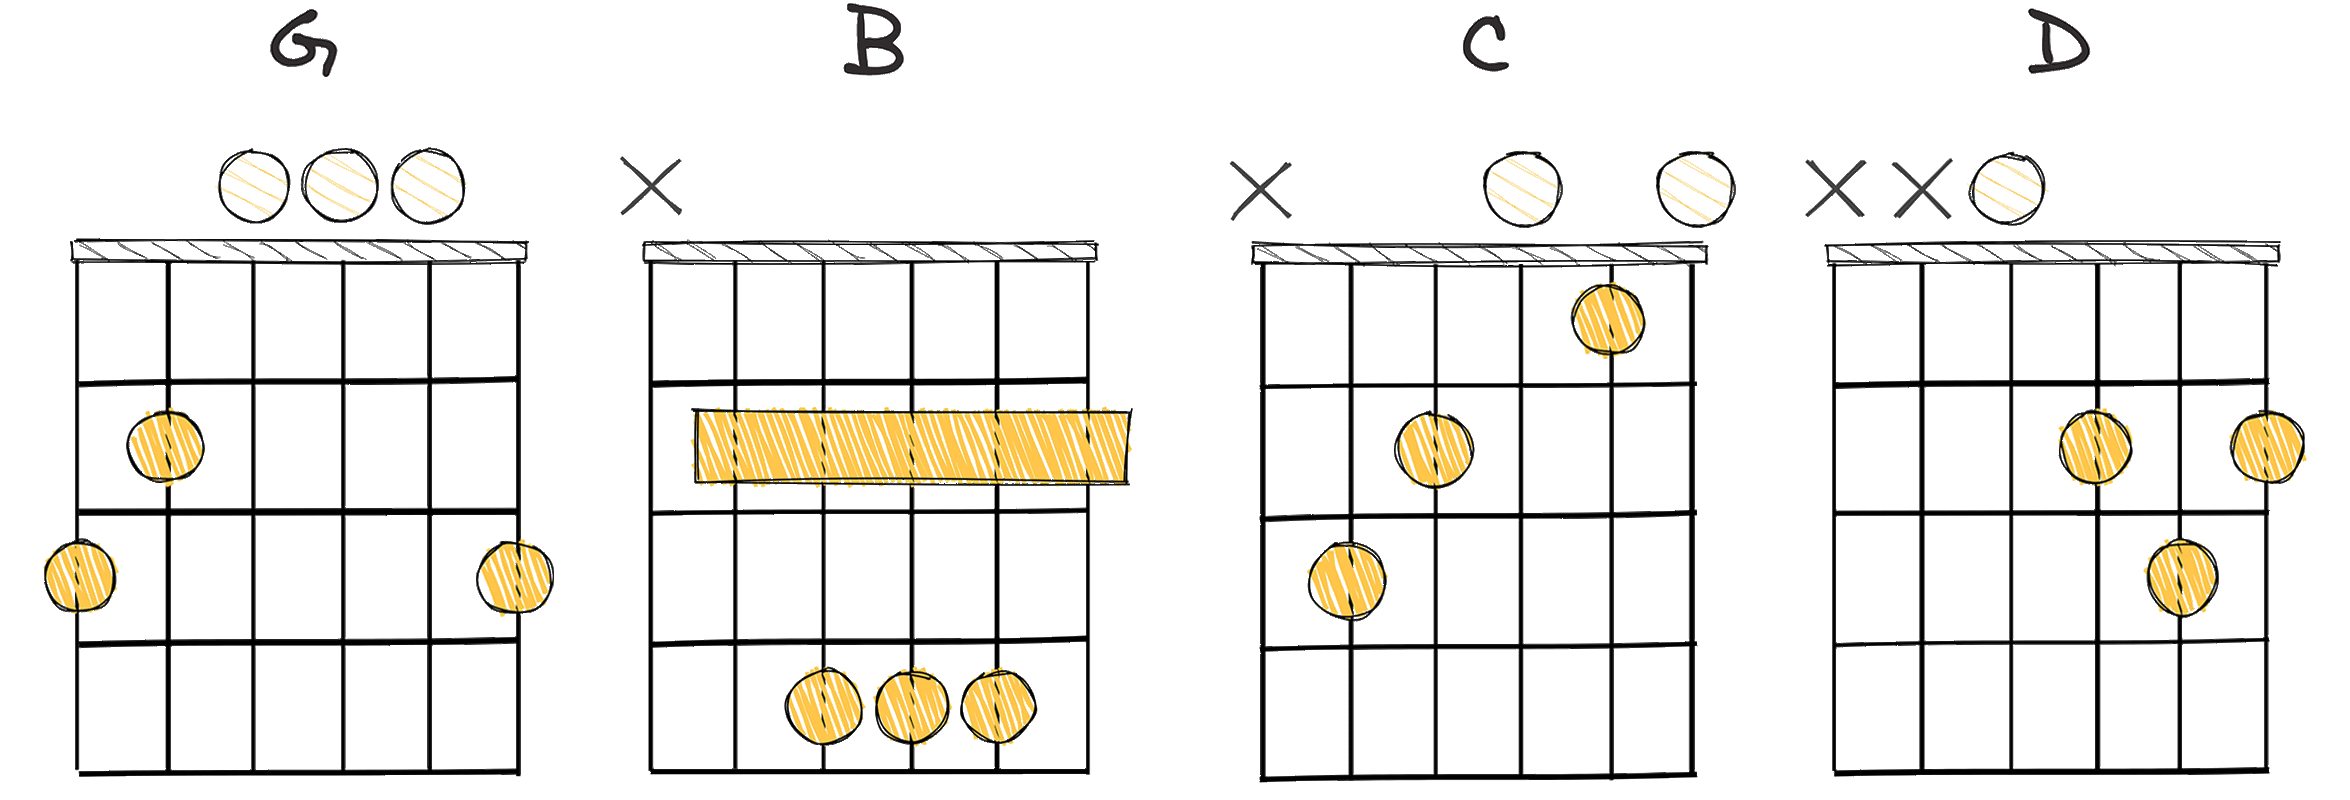 I-III-IV-V (1-3-4-5) chords diagram